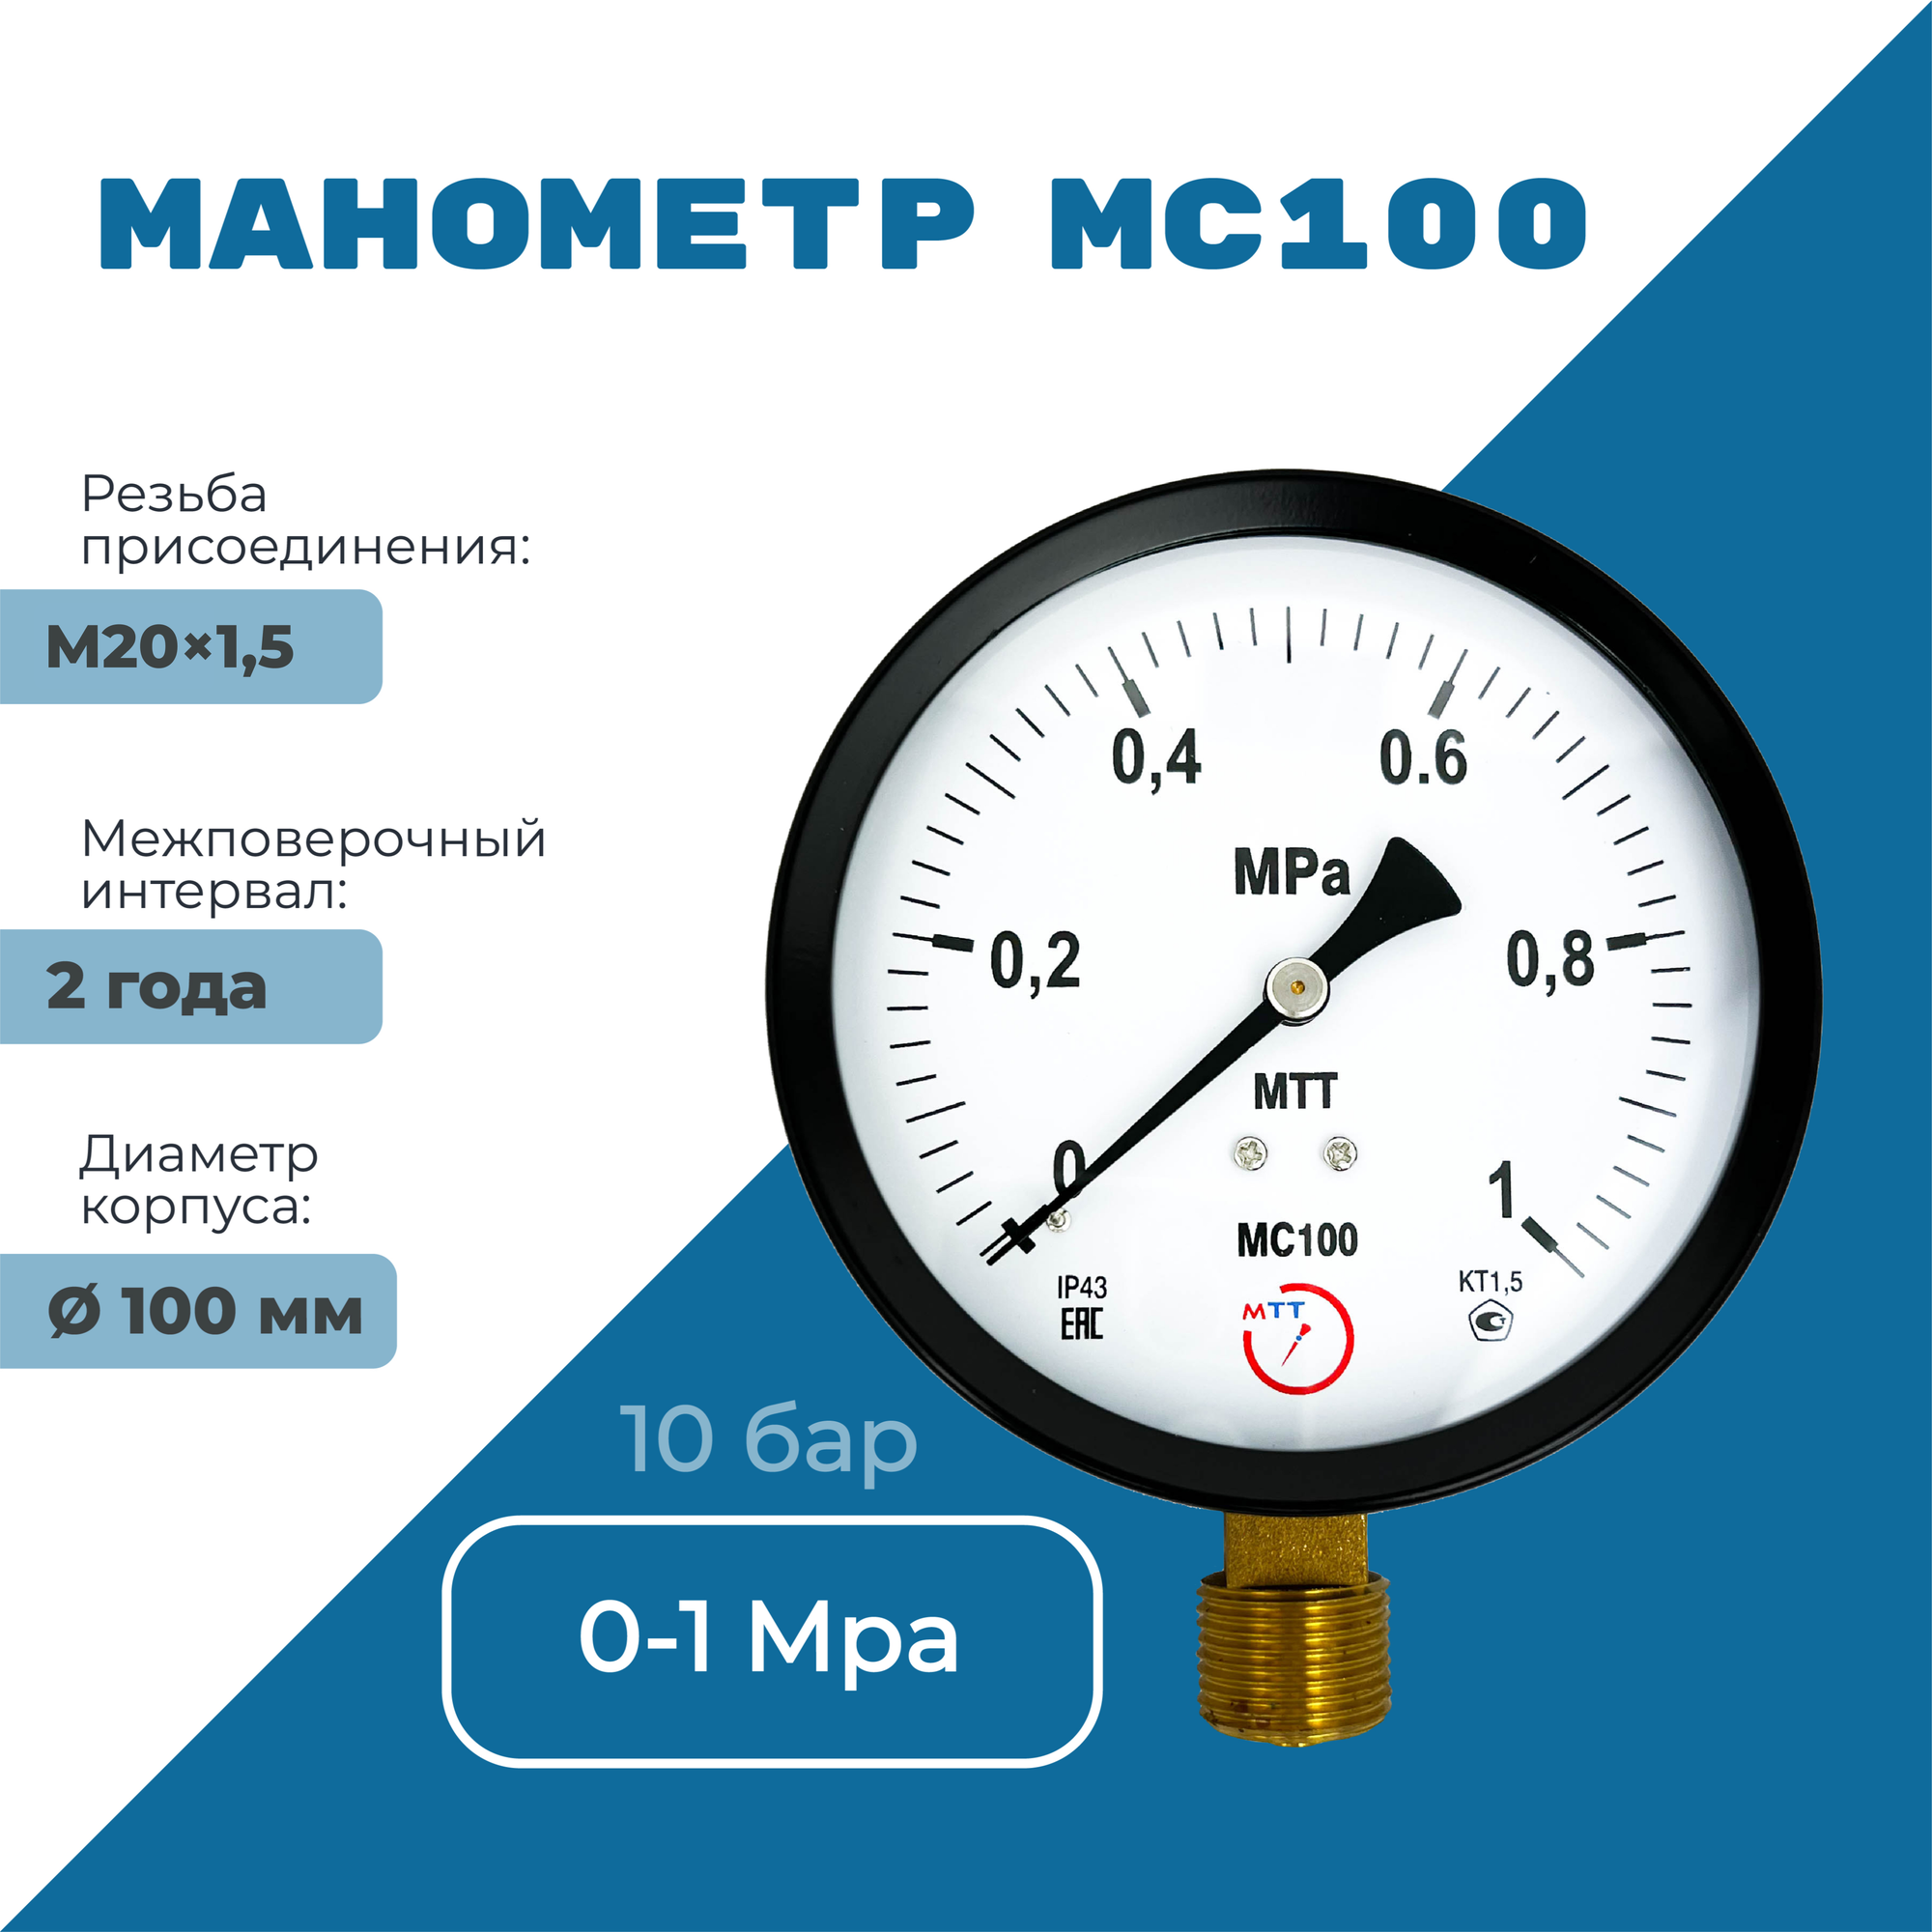 Манометр технический МС100 давление 0-1 МПа (10 бар) резьба М20х1.5 класс точности 15 корпус 100 мм. поверка 2 года